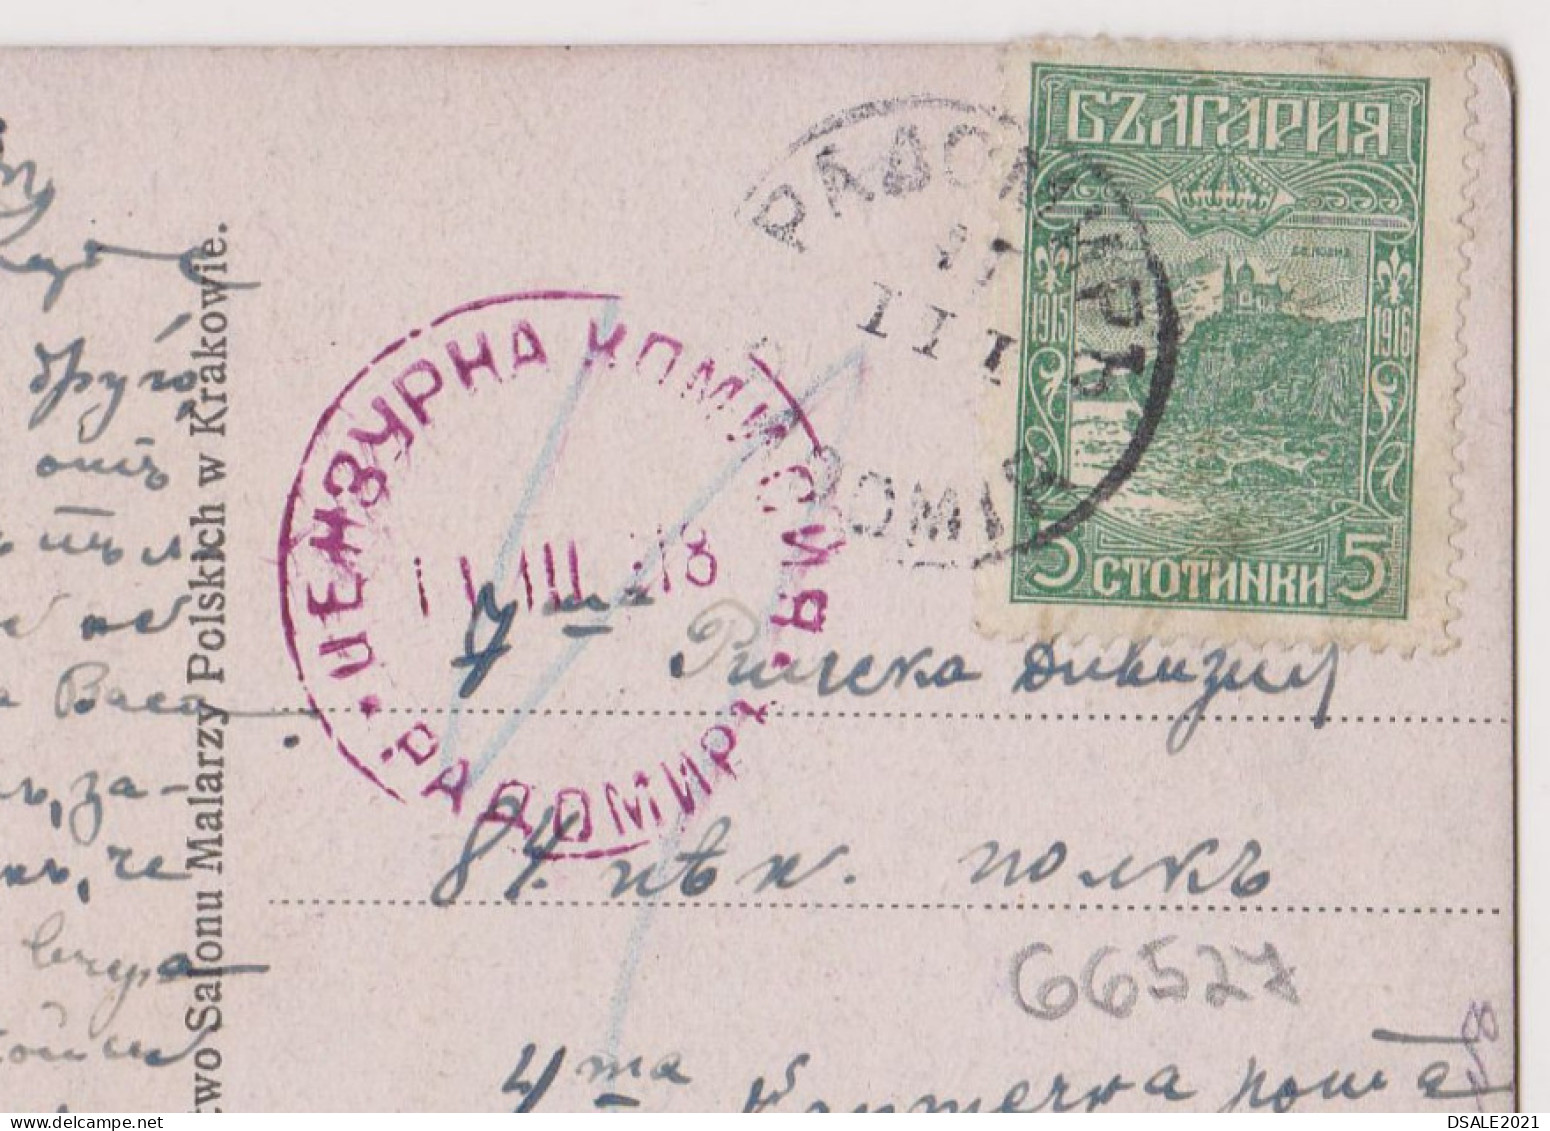 Bulgaria Bulgarien Ww1-1918 Civil Censored RADOMIR Cachet Artist Postcard By K. Szczawinski Boy W/Violin Postcard /66527 - Guerra